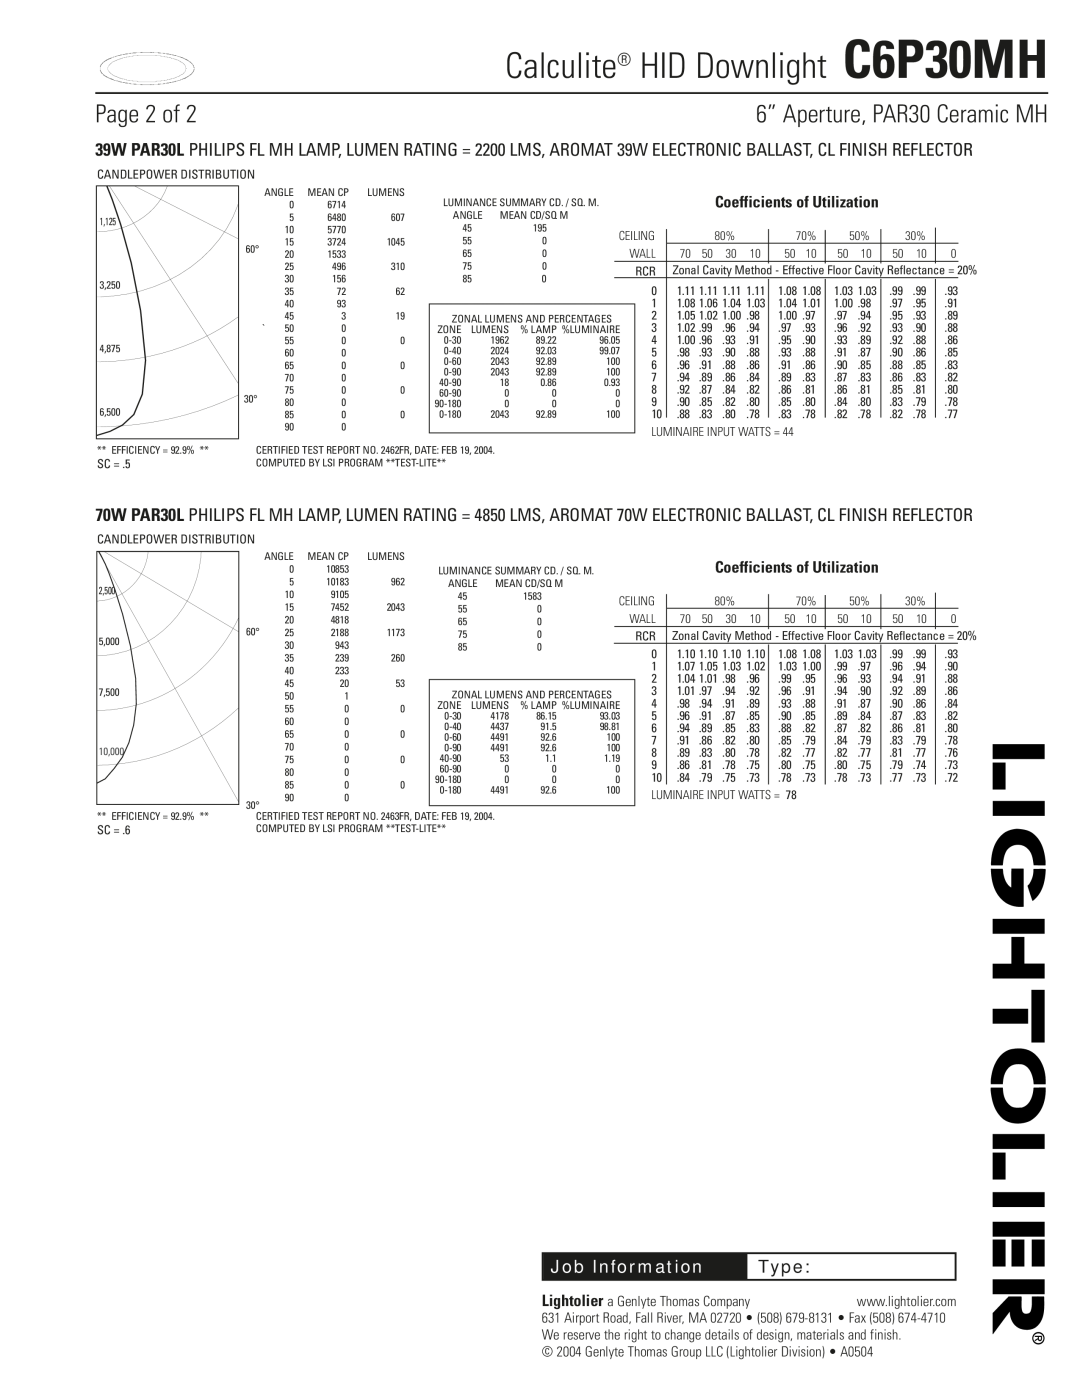 Lightolier Page 2 of, Calculite HID Downlight C6P30MH, 6” Aperture, PAR30 Ceramic MH, Job Information, Type 